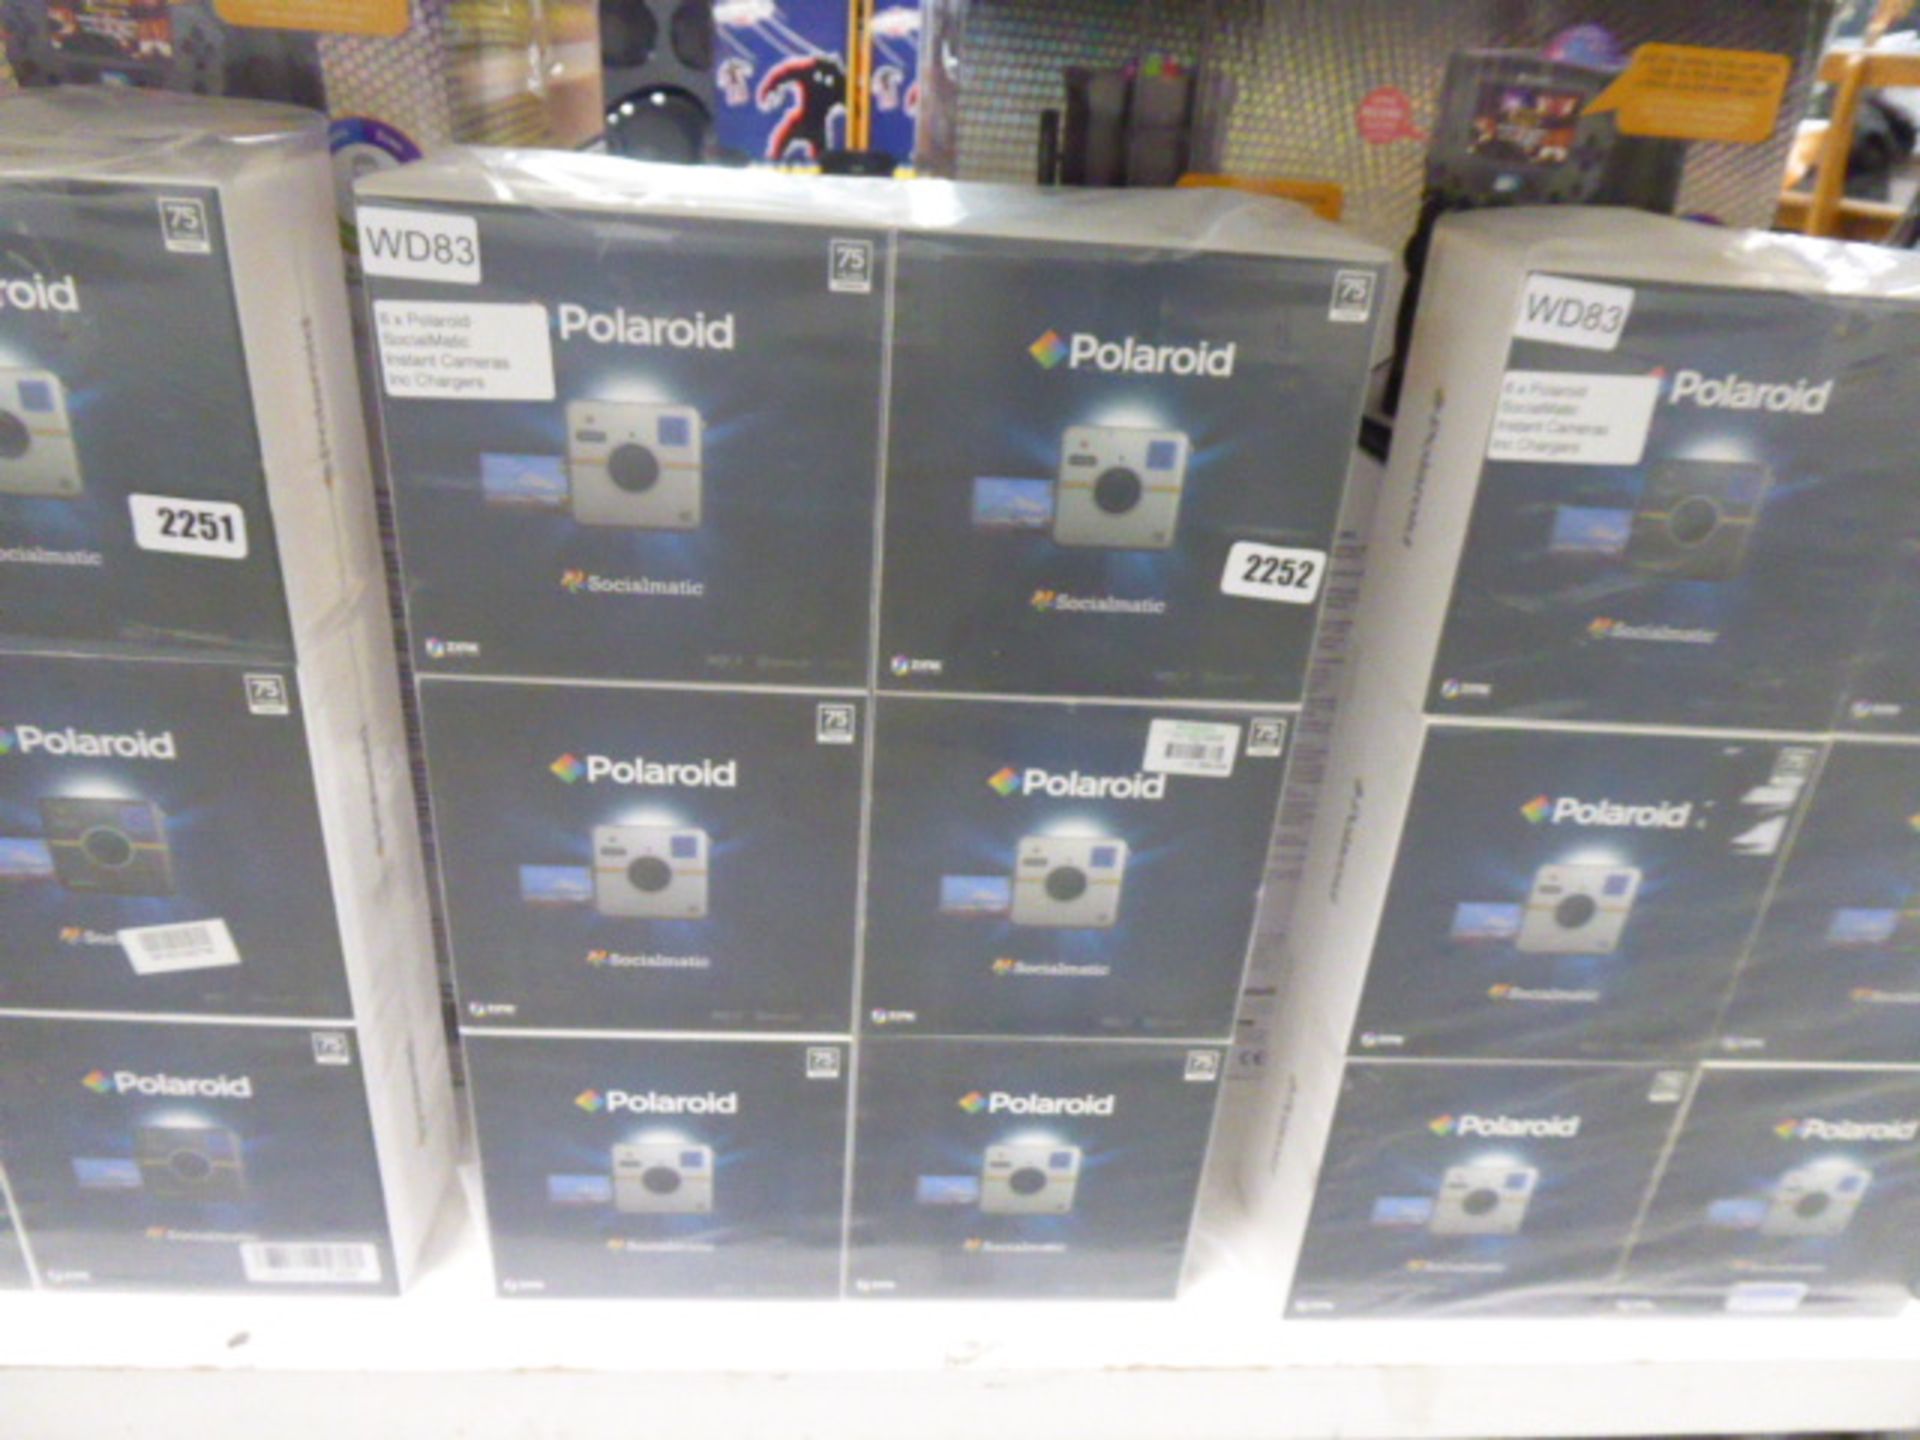 Clear bag containing 6 boxed Sociomatic Polaroid cameras